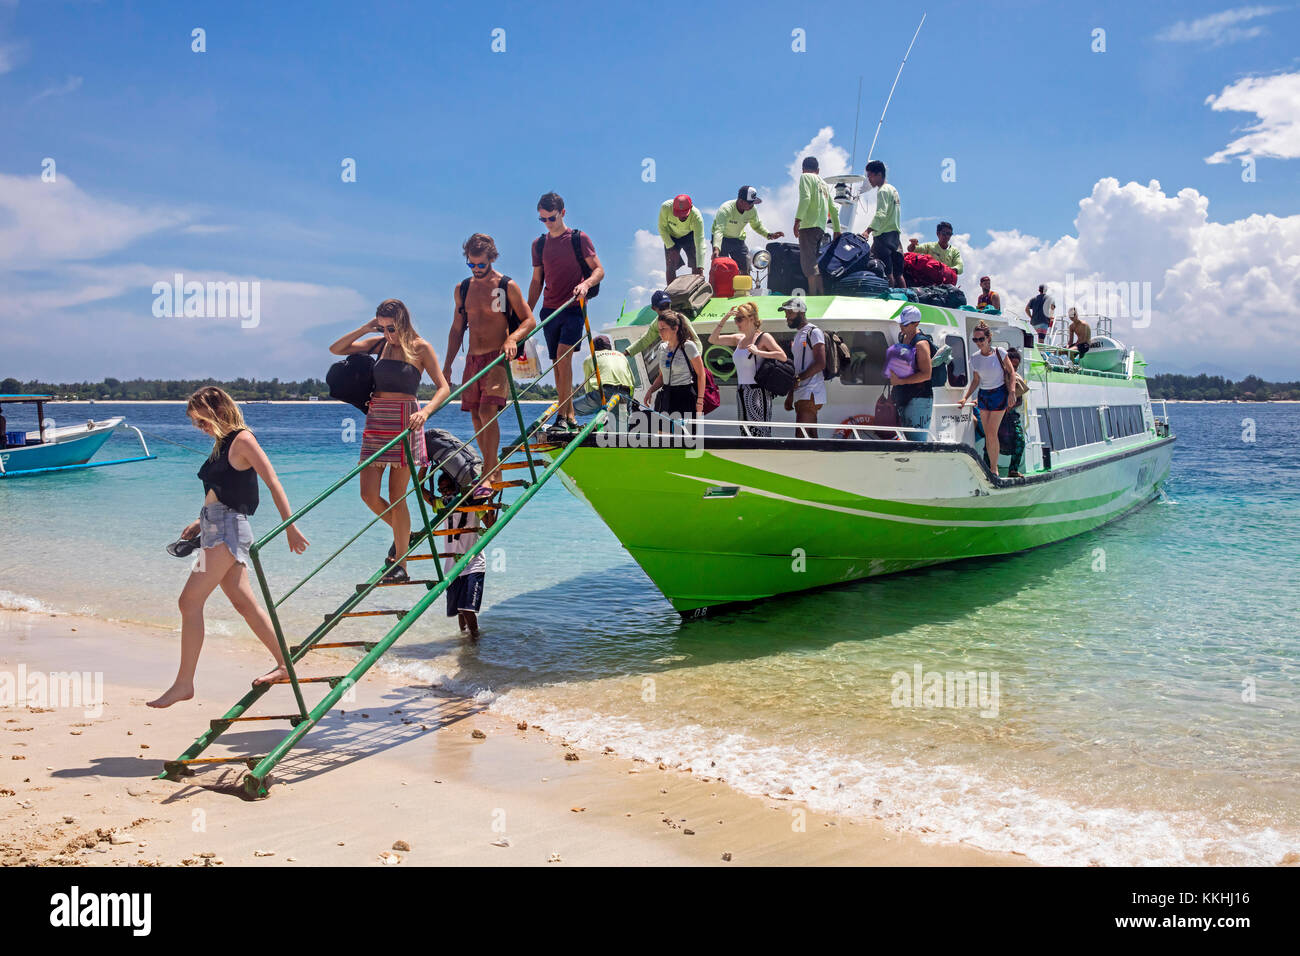 Western tourists debarking from speedboat / fast boat on the island Gili Trawangan, largest of Lombok's Gili Islands, Indonesia Stock Photo